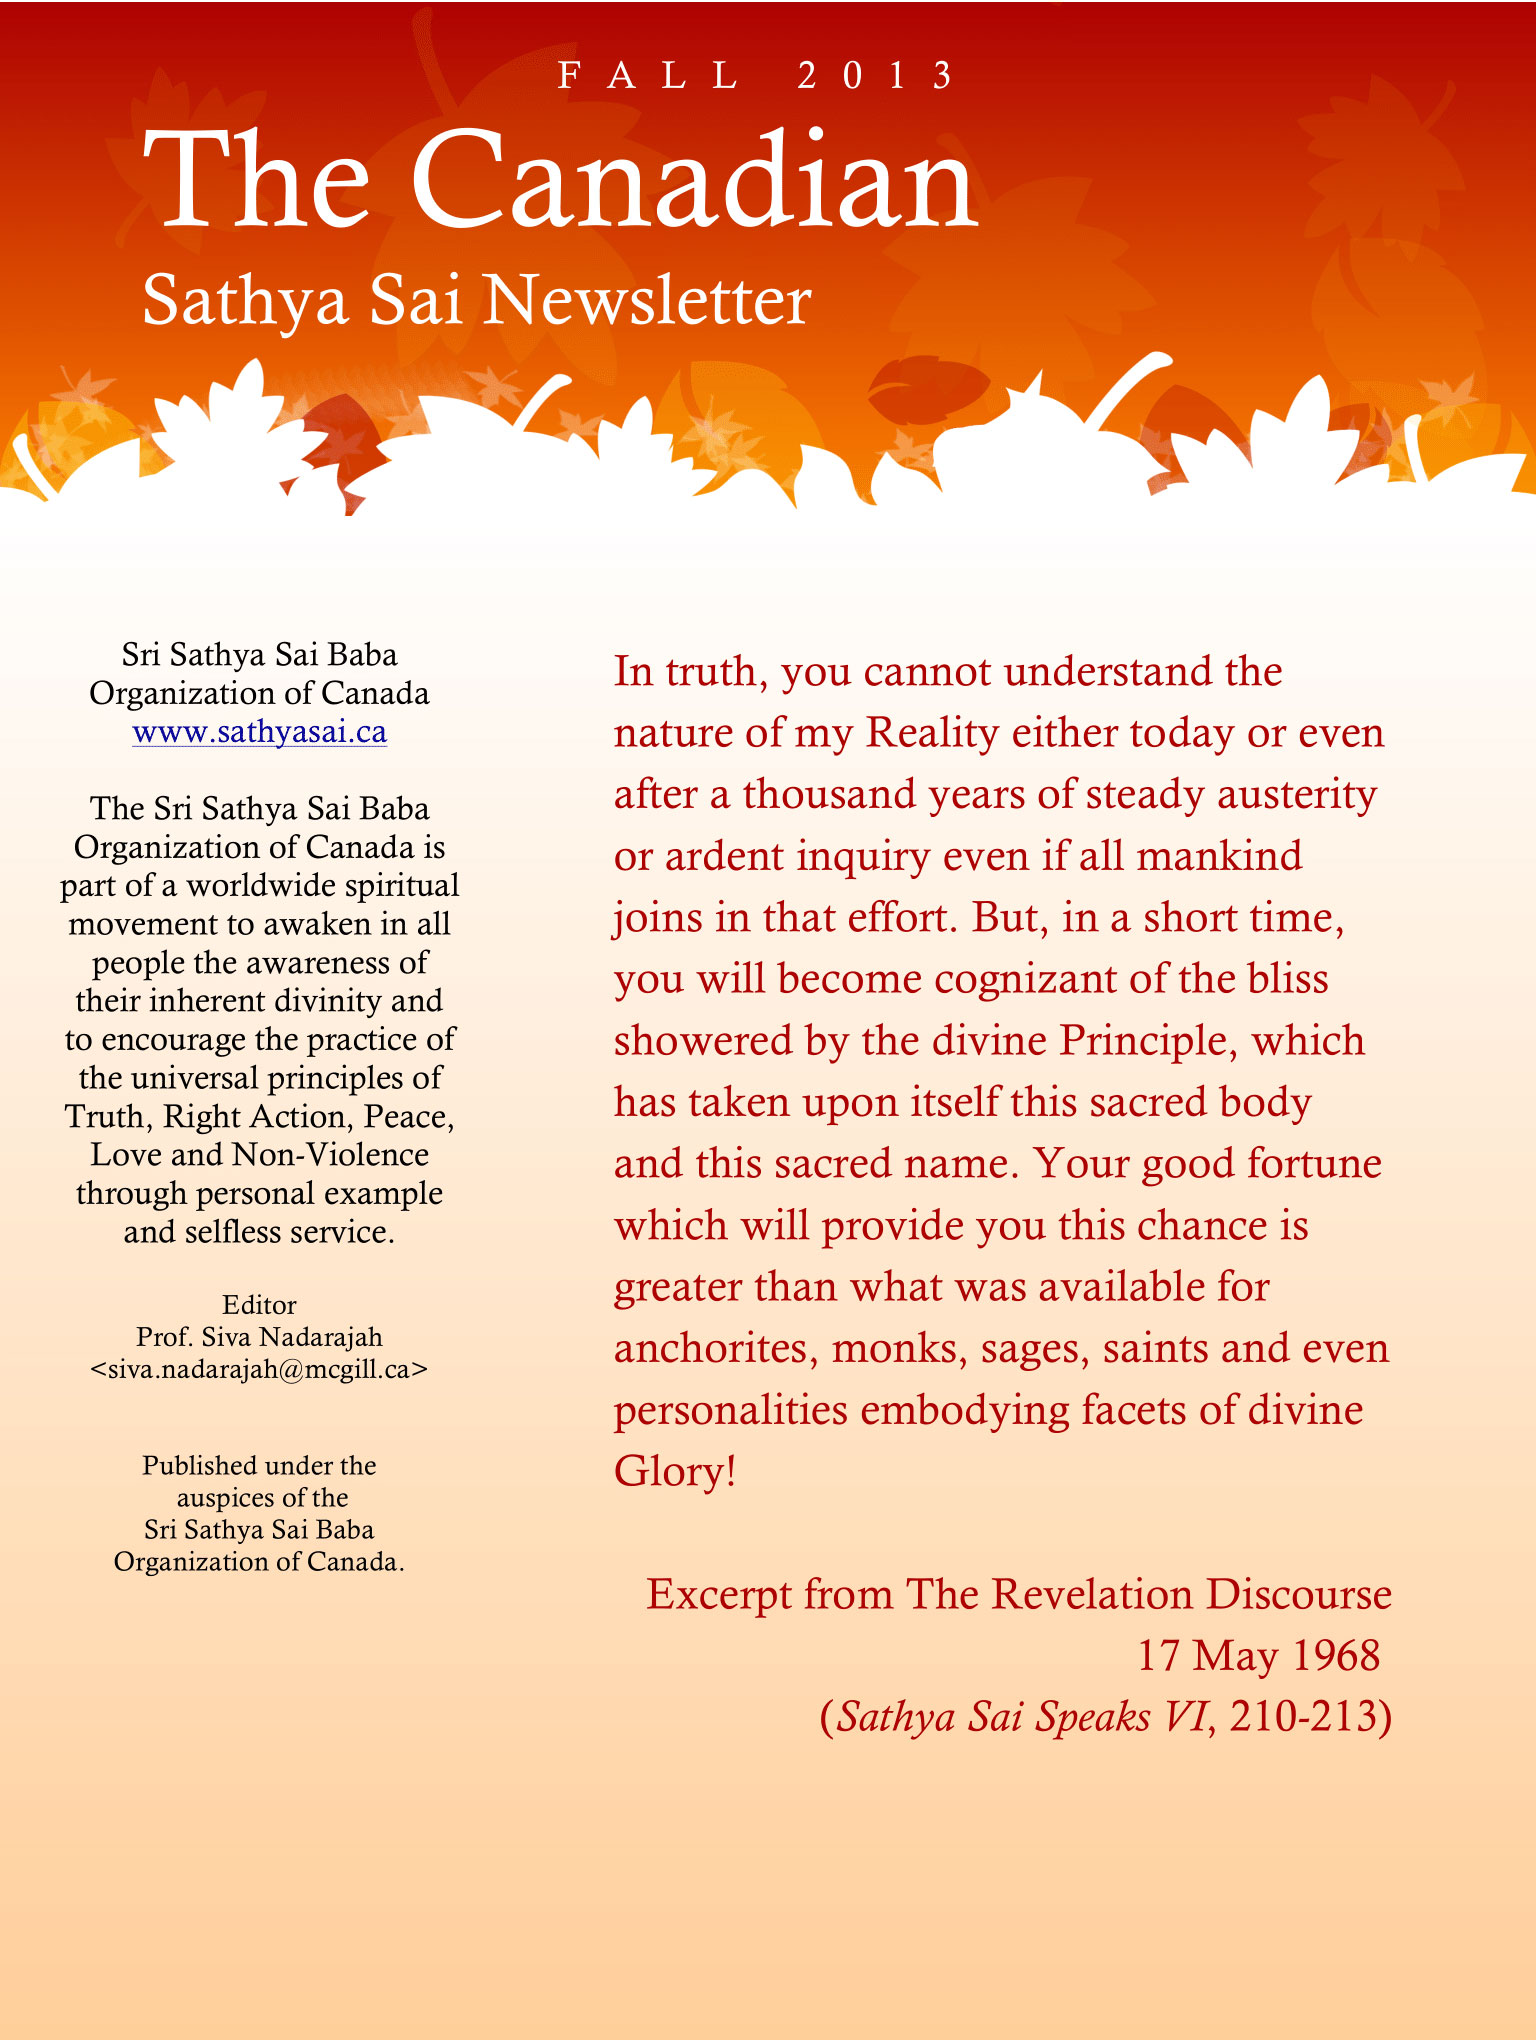 The Canadian Sathya Sai Magazine - Fall 2013